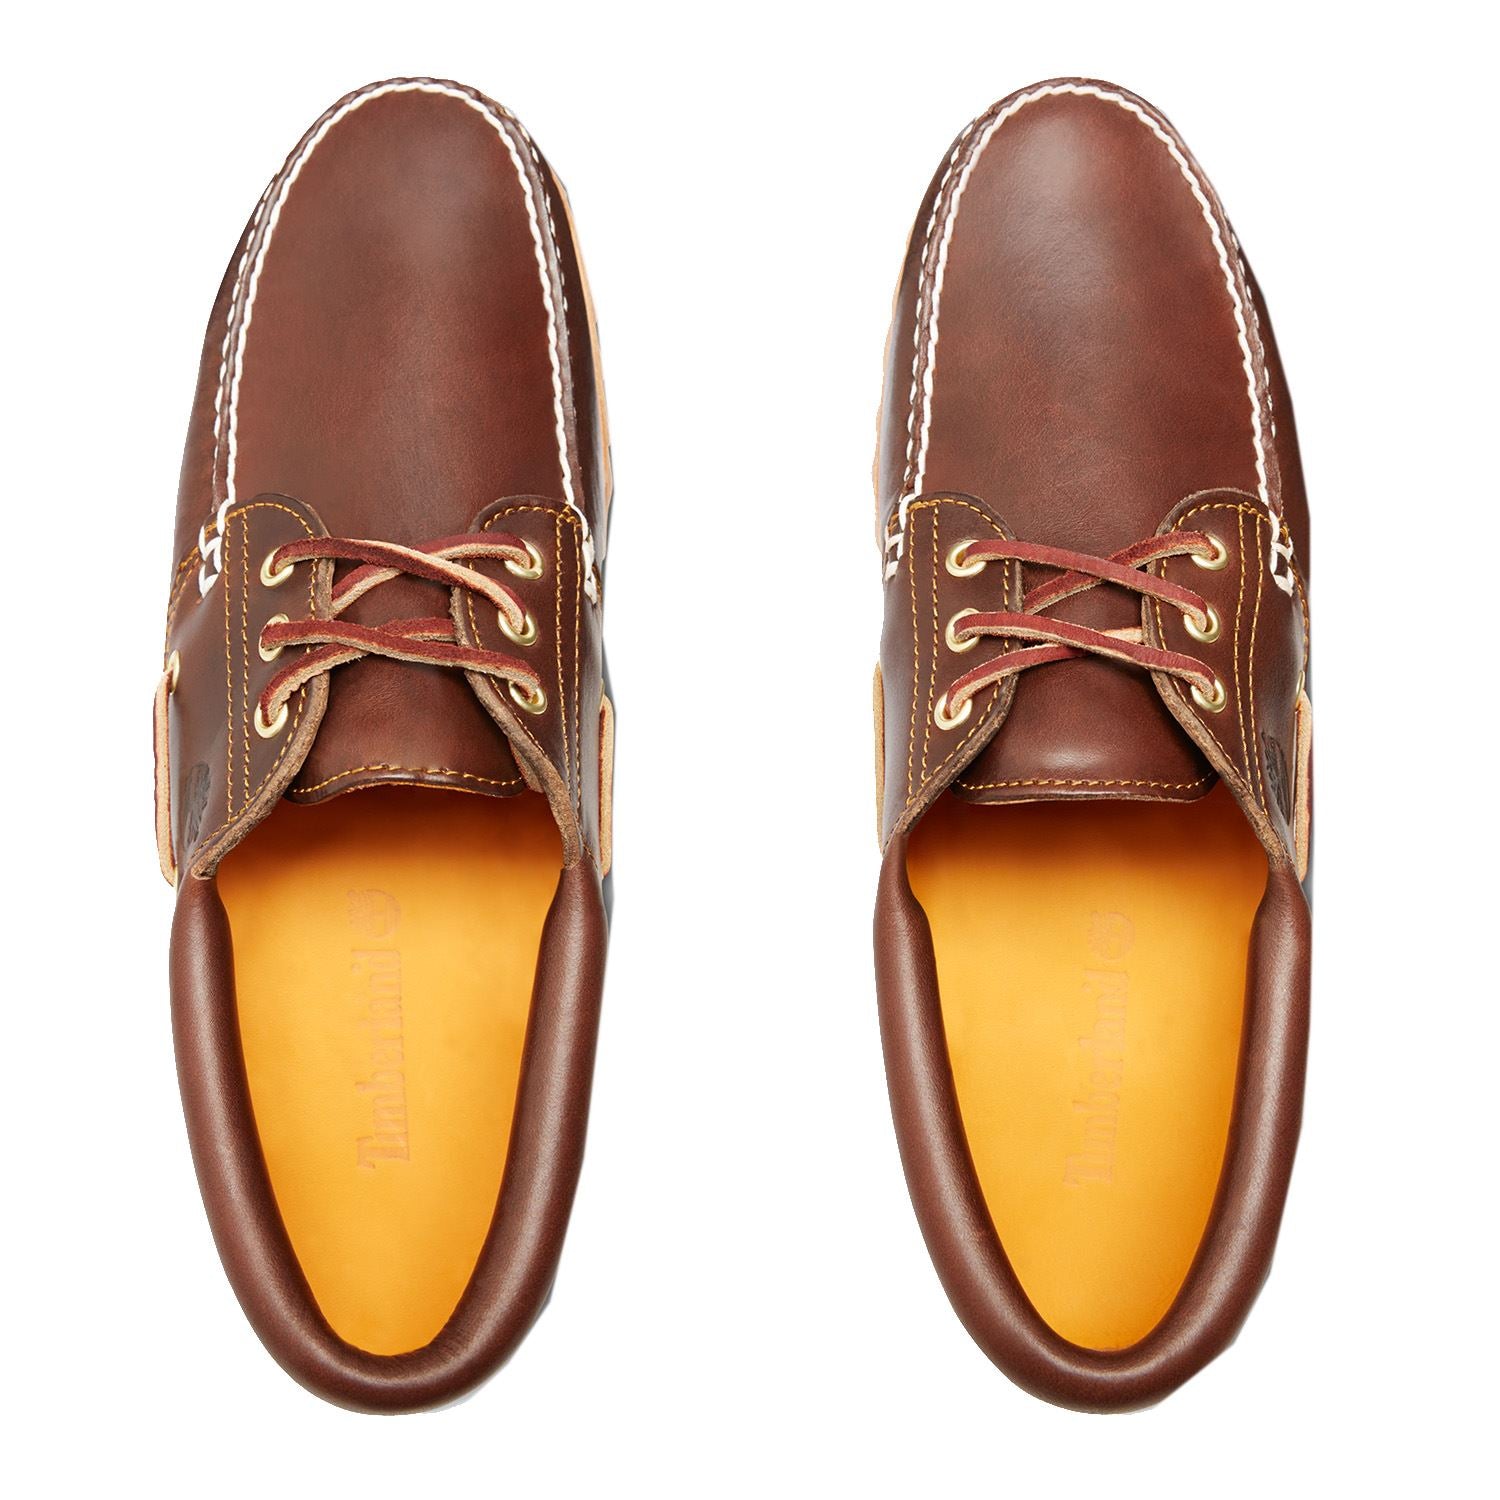 Timberland Heritage 3 Eye Classic Lug Brown Mens Shoes